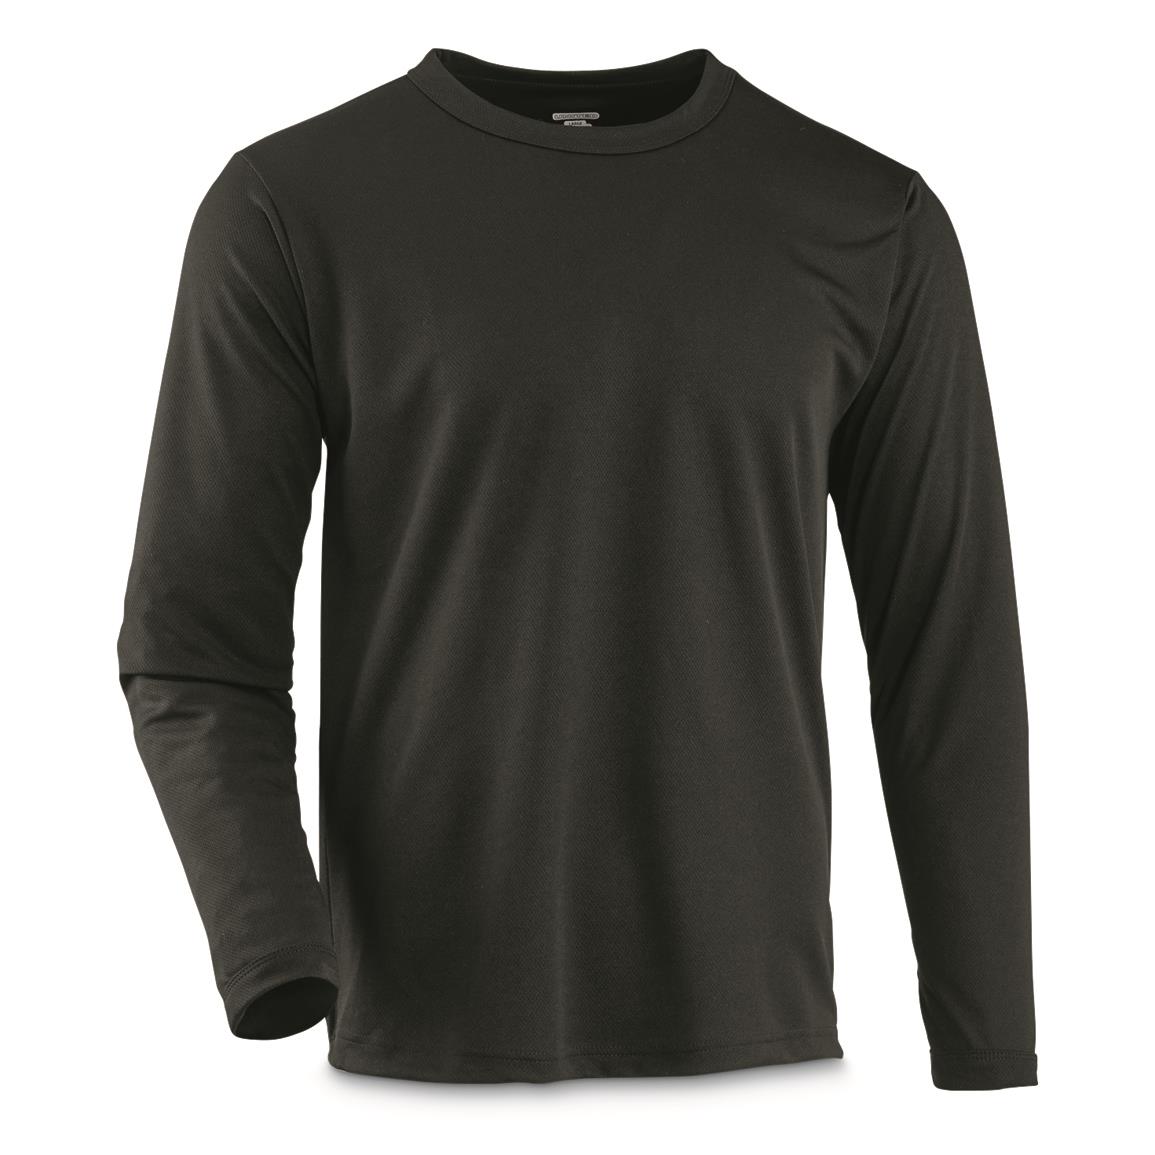 U.S. Military Surplus Midweight Long Sleeve Base Layer Shirt, New, Black